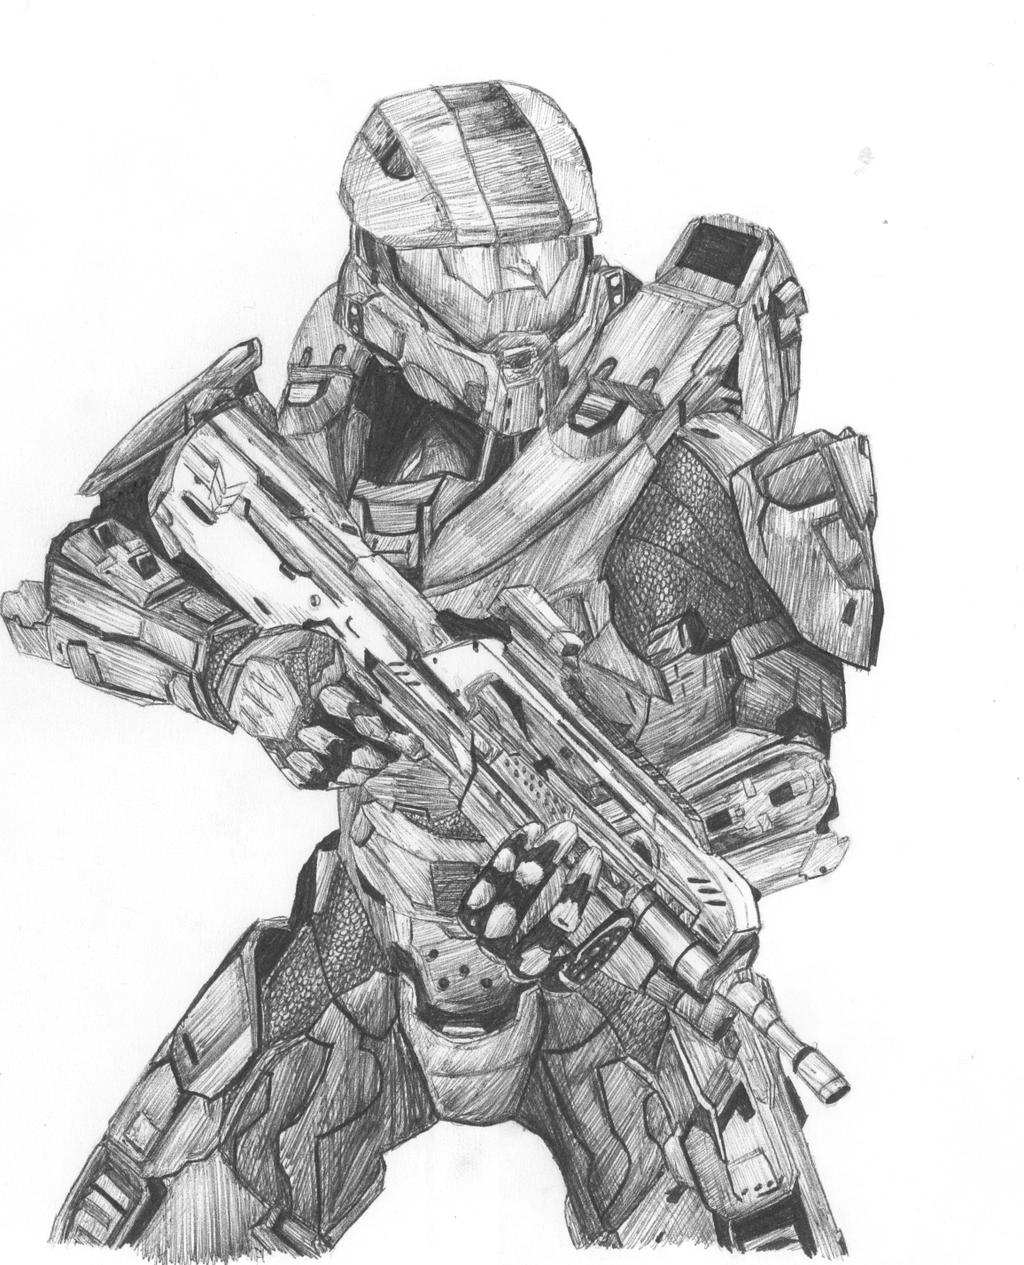 'John S117 'Master Cheif'' (Halo 4) by WolfysKitty on DeviantArt